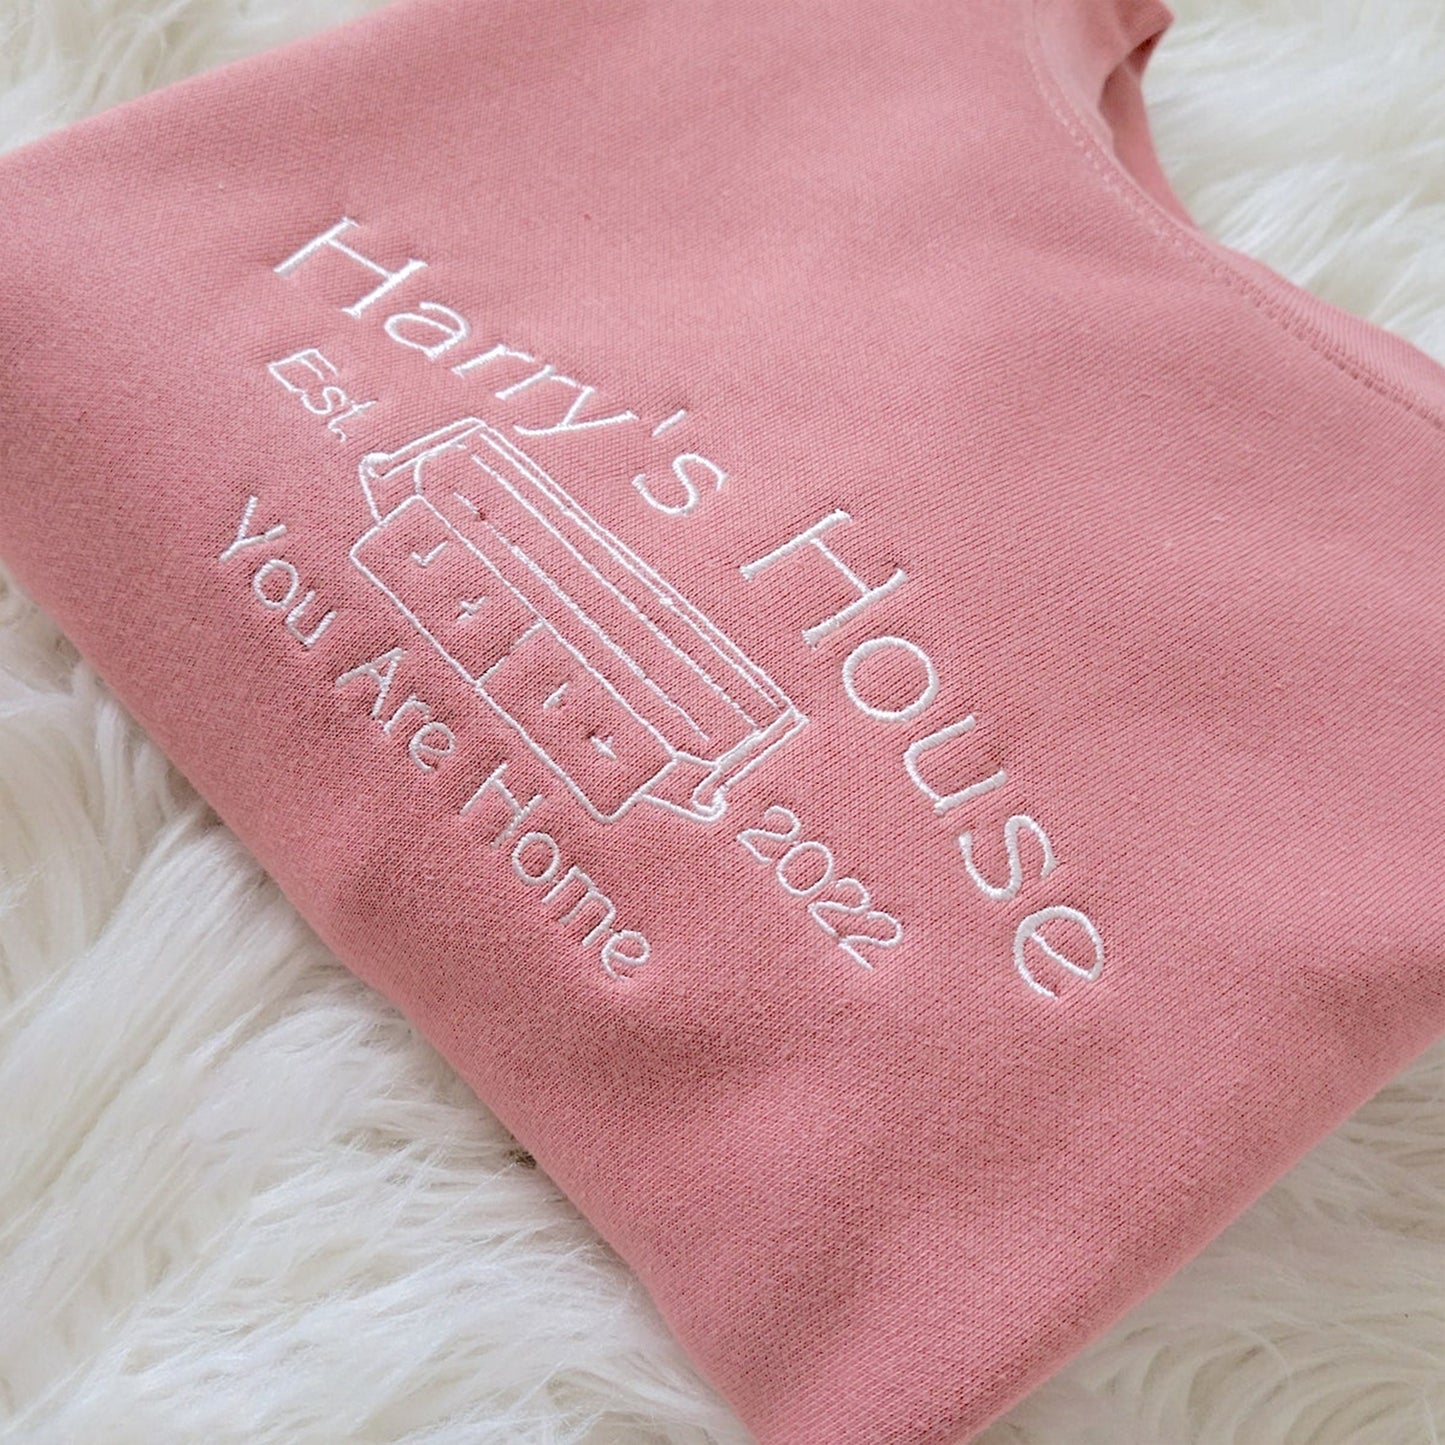 Harry's House Embroidered Sweatshirt